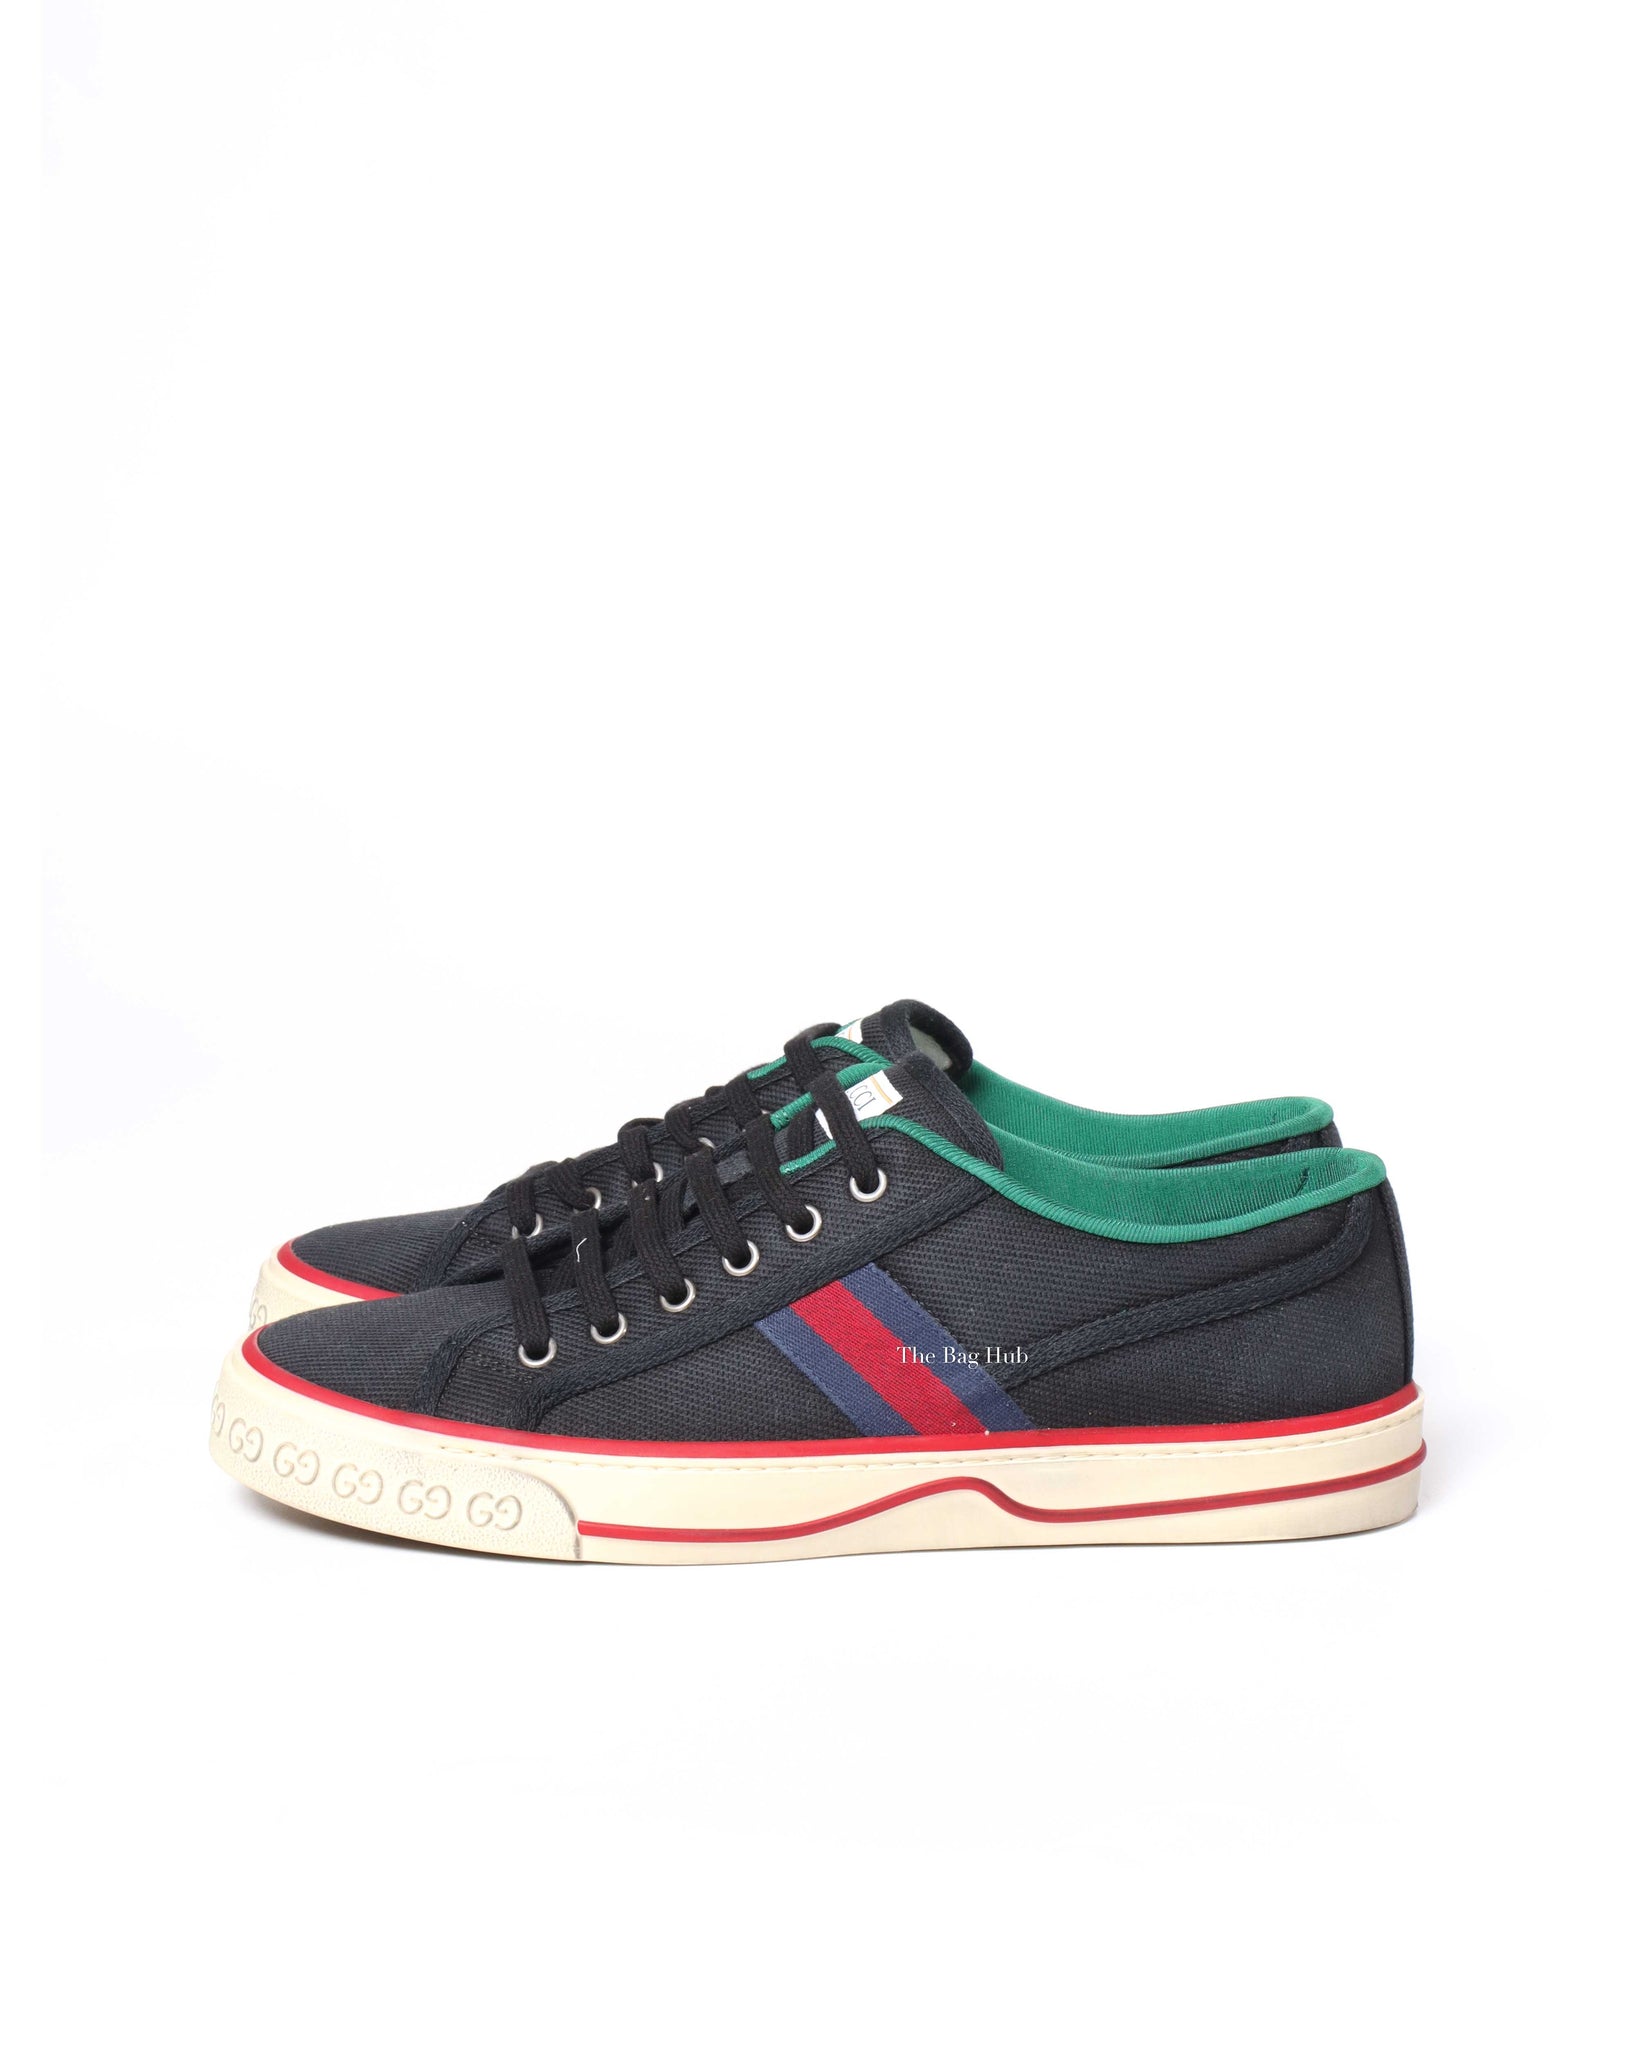 Gucci Black Web Canvas Men's Tennis Sneakers Size 38.5-5